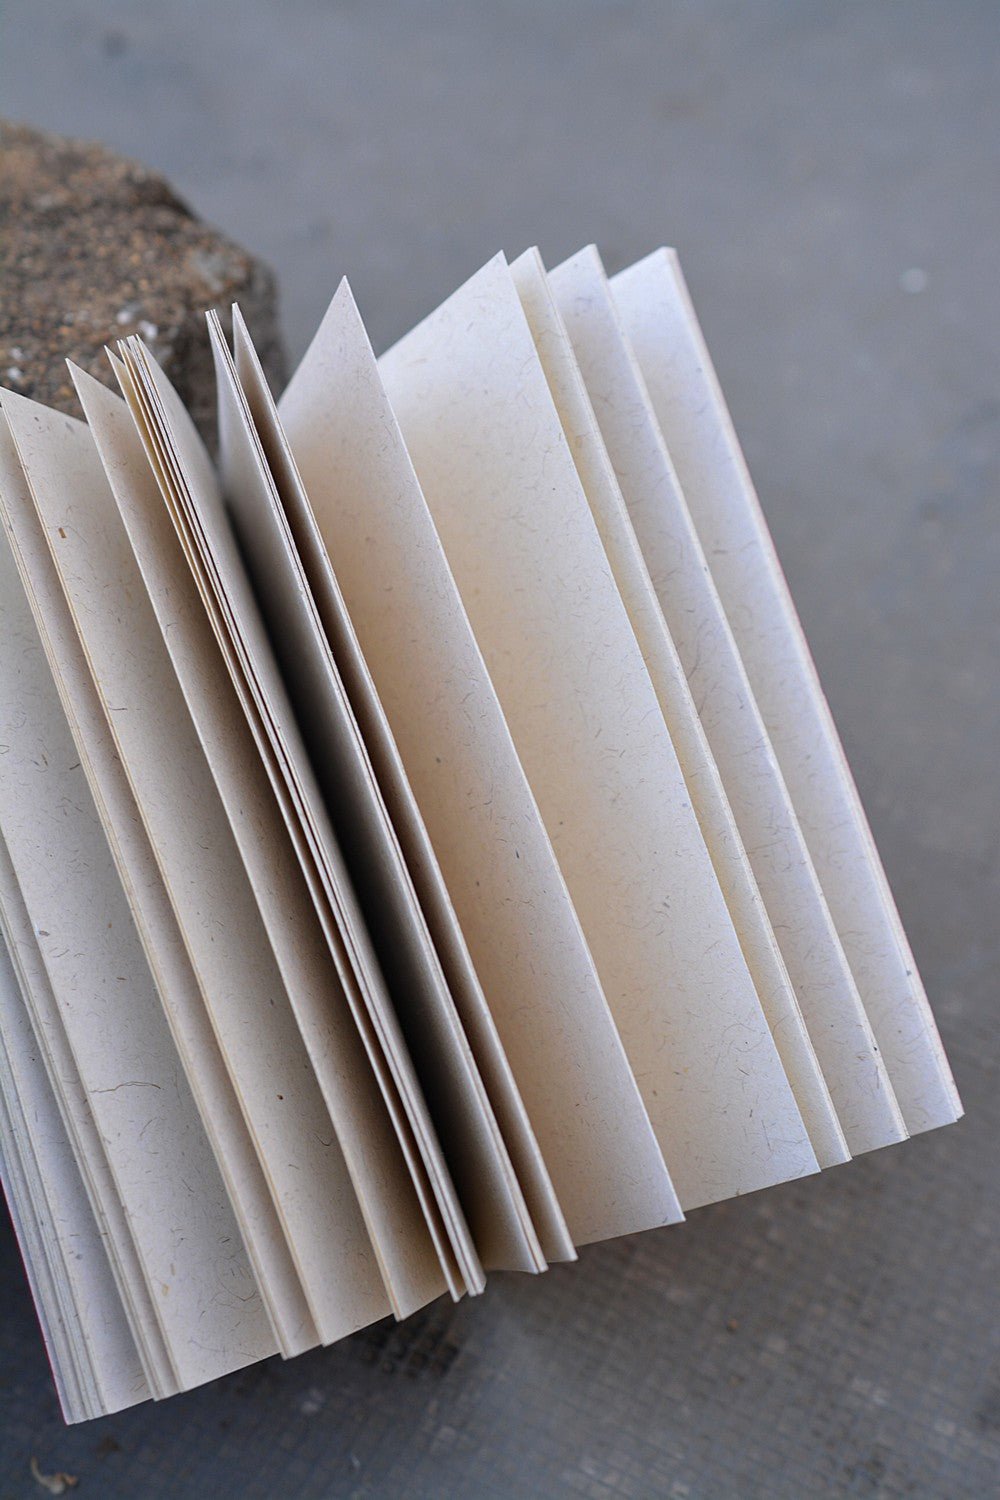 Handmade Paper Notebook. - metaphorracha